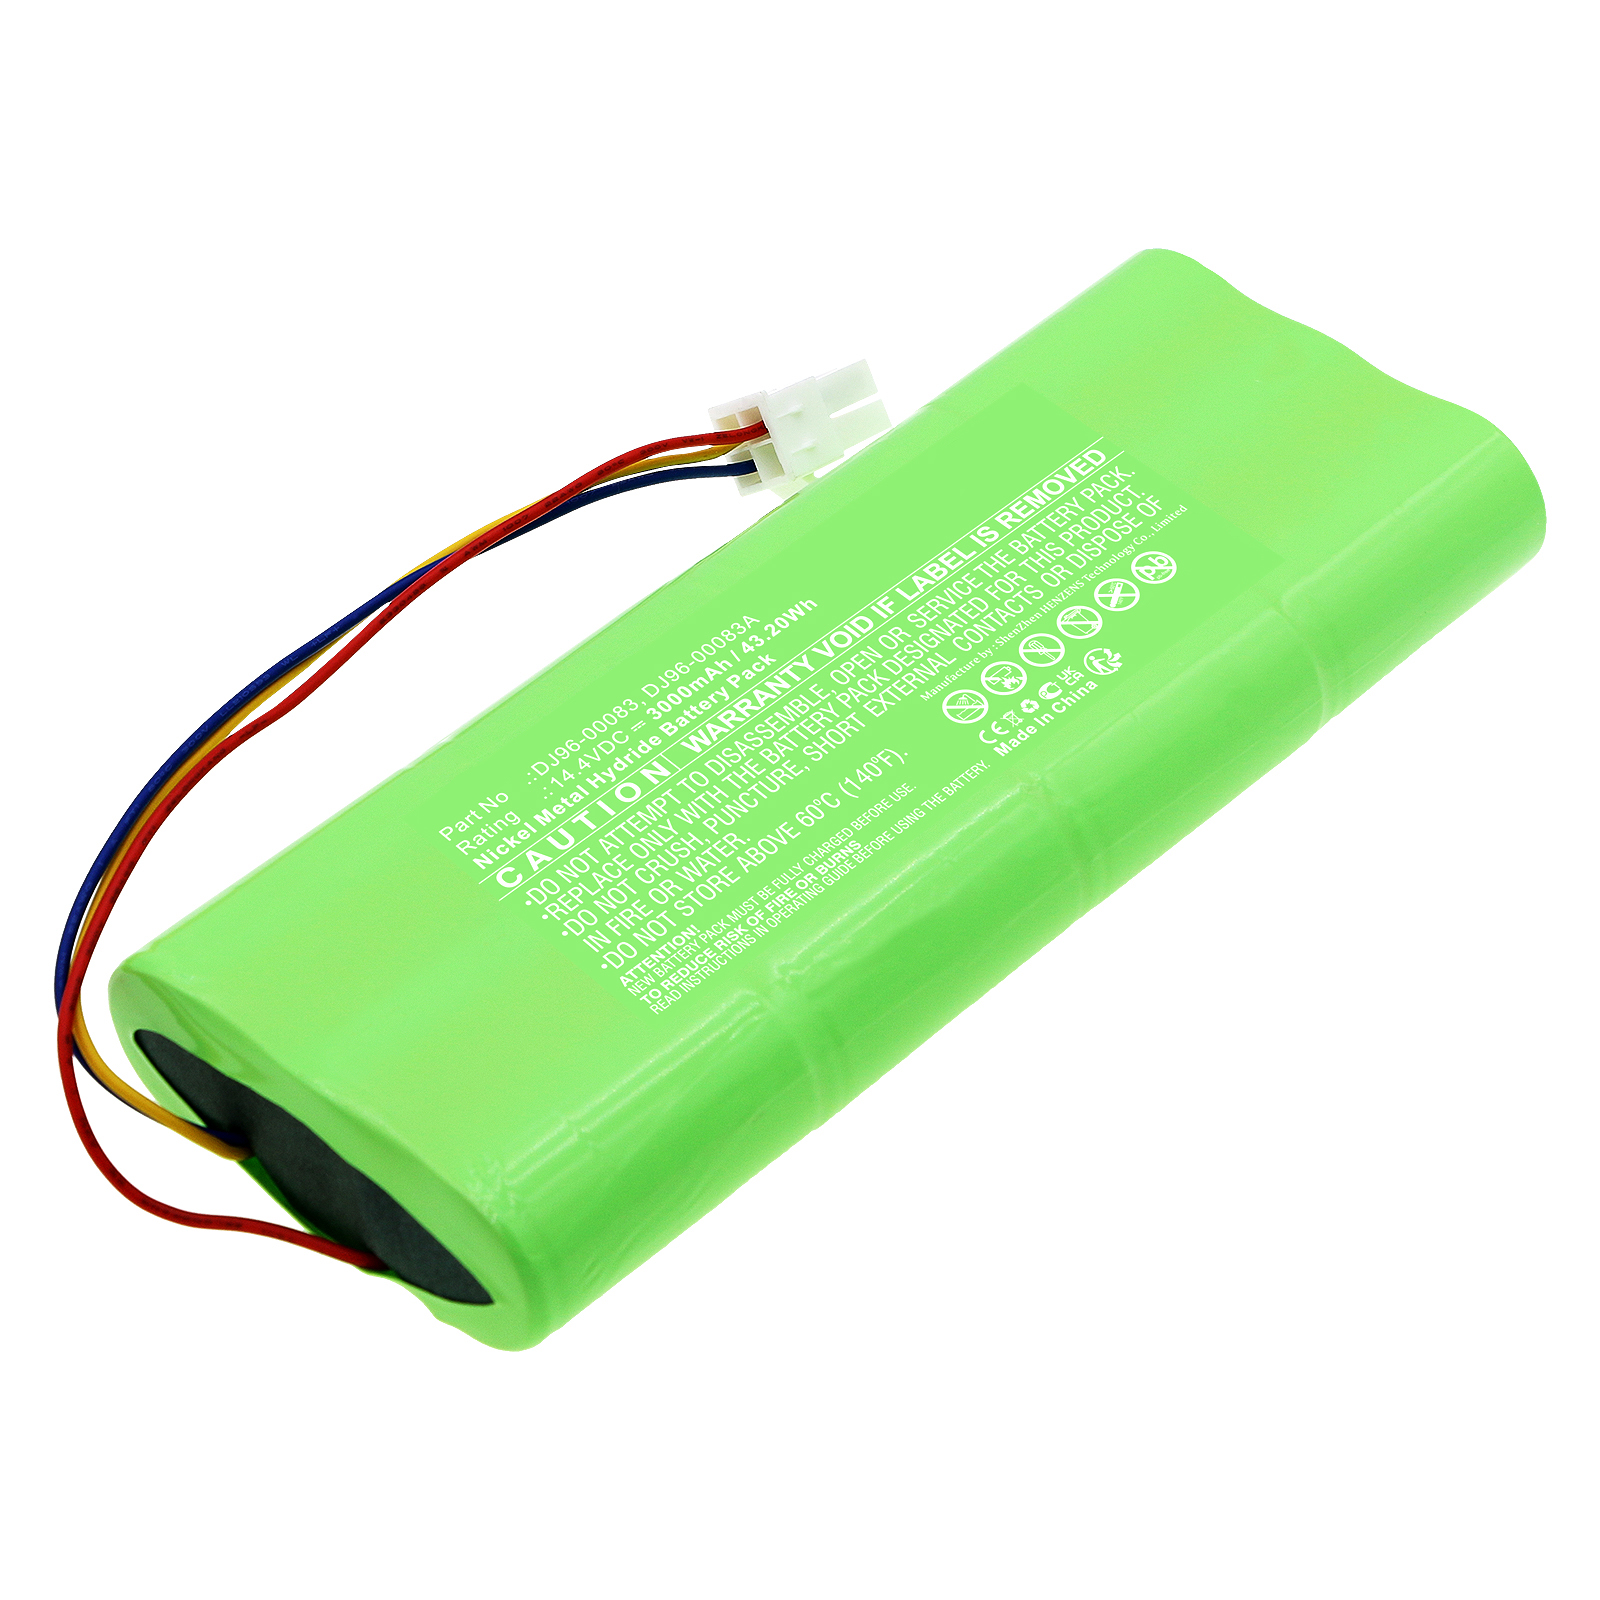 Synergy Digital Vacuum Cleaner Battery, Compatible with Samsung DJ96-00083 Vacuum Cleaner Battery (Ni-MH, 14.4V, 3000mAh)